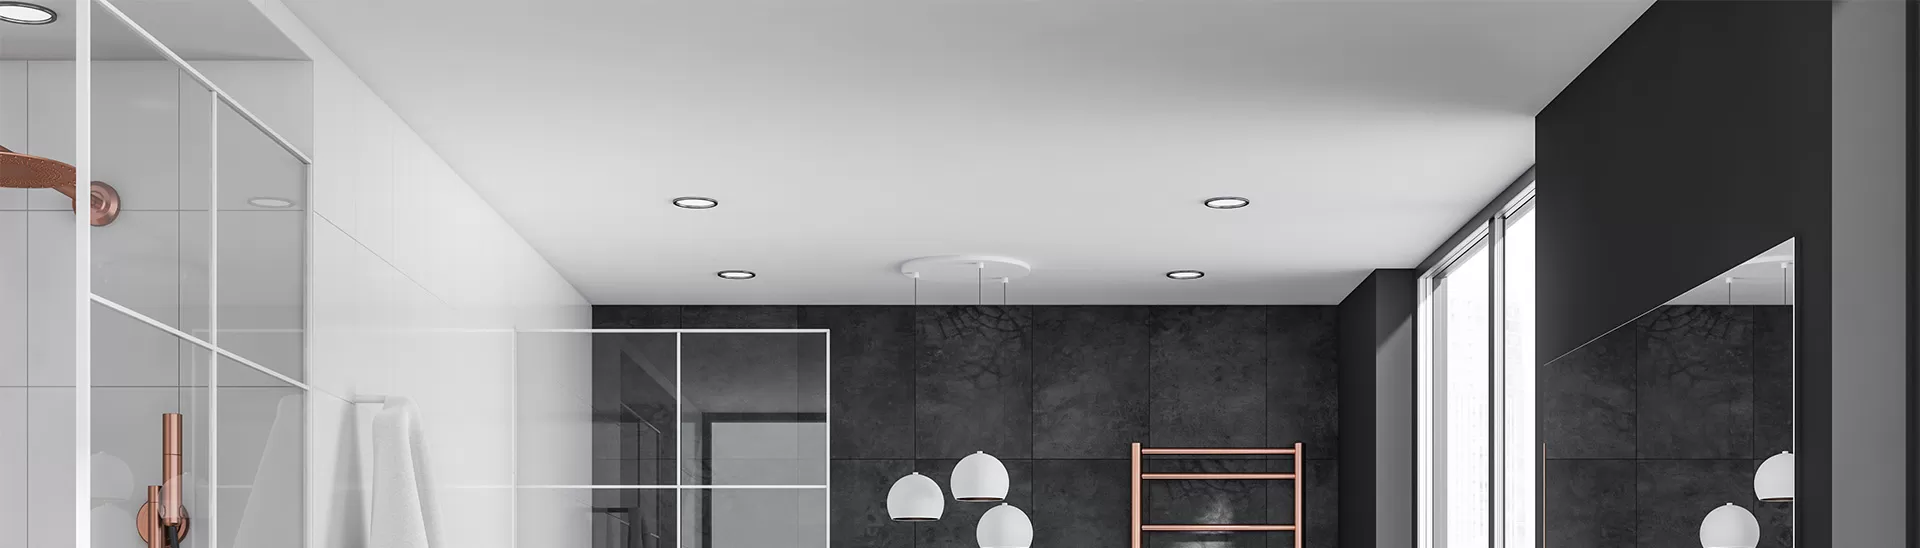 12 Best Small Bathroom POP Ceiling Design Ideas